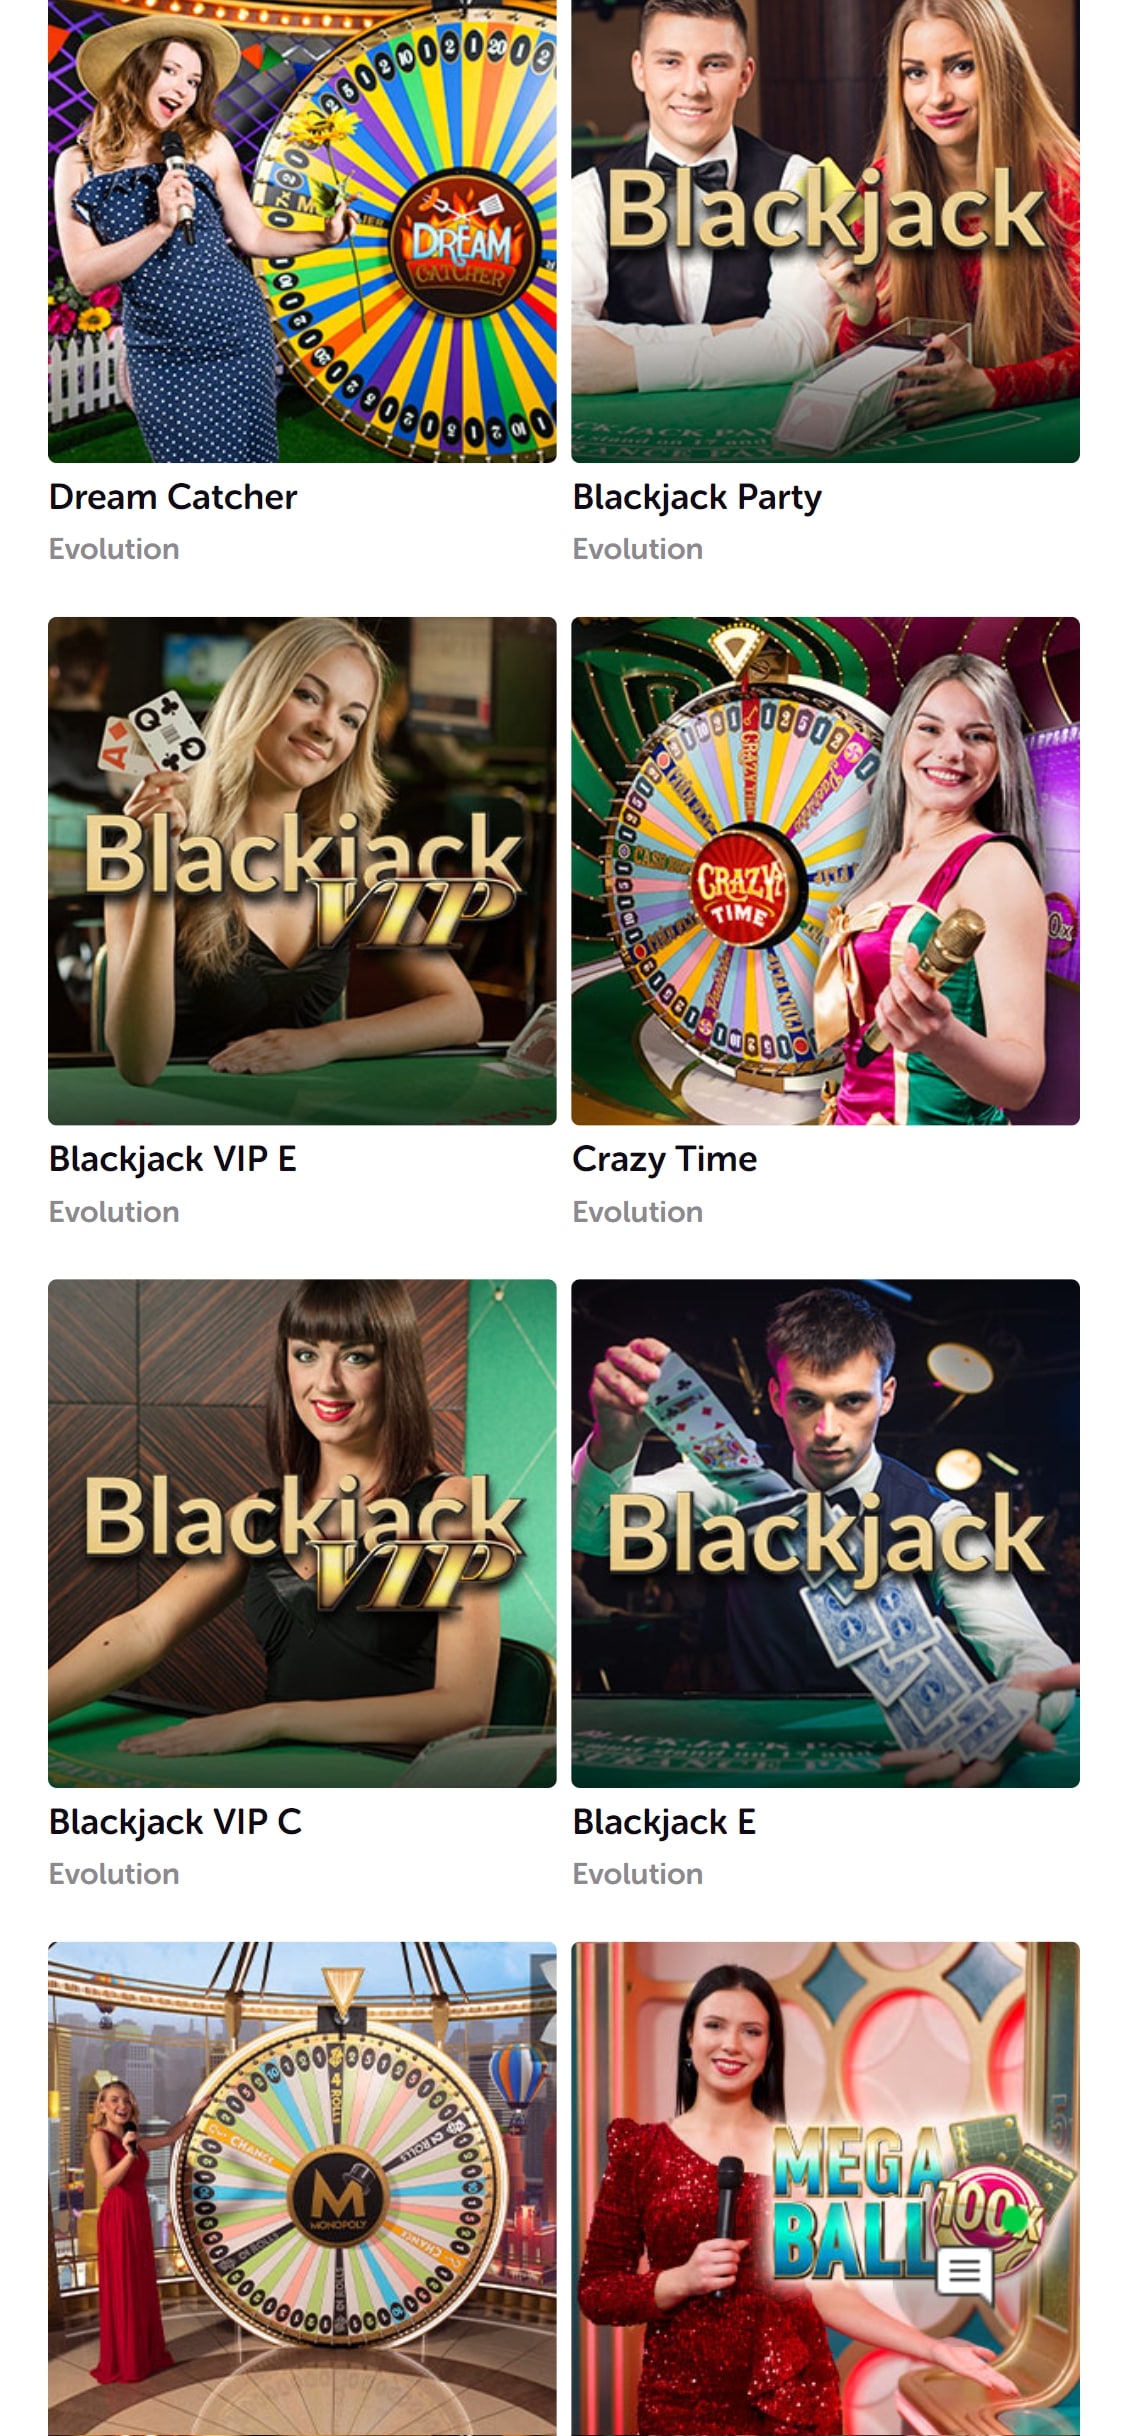 Super Casino Estonia Mobile Live Dealer Games Review